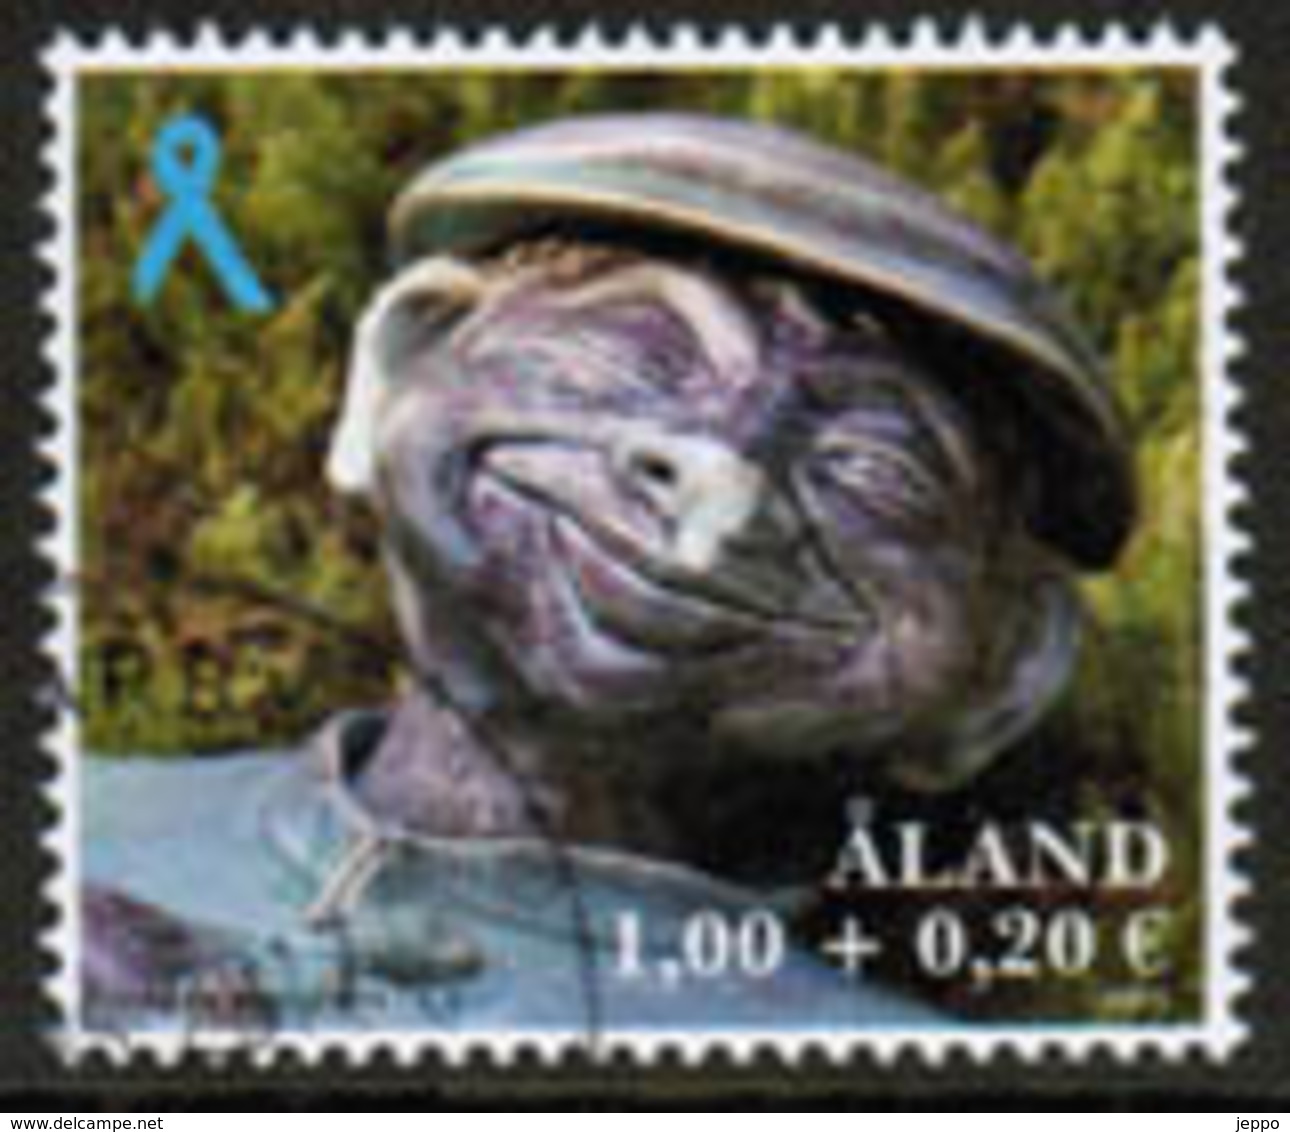 2013 Aland Islands, Blue Ribbon Used. - Aland